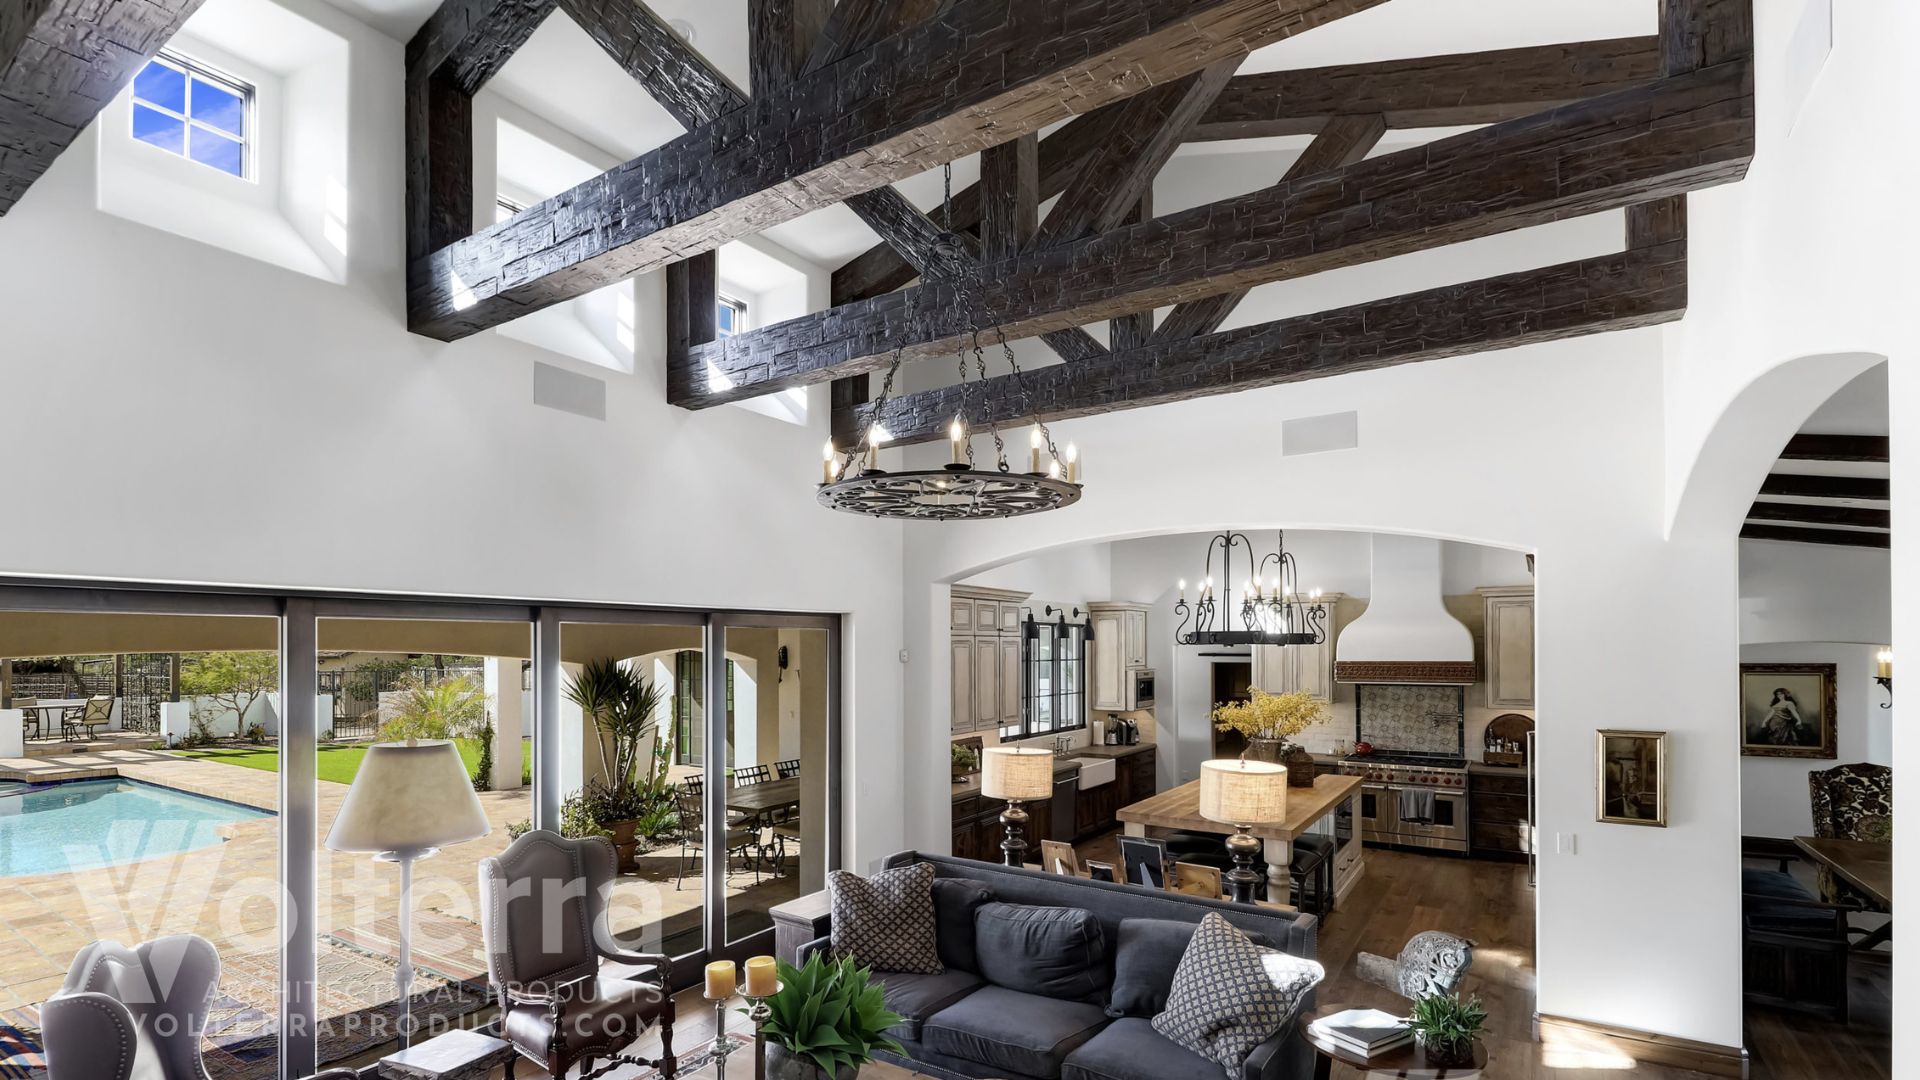 decorative wood ceiling beams